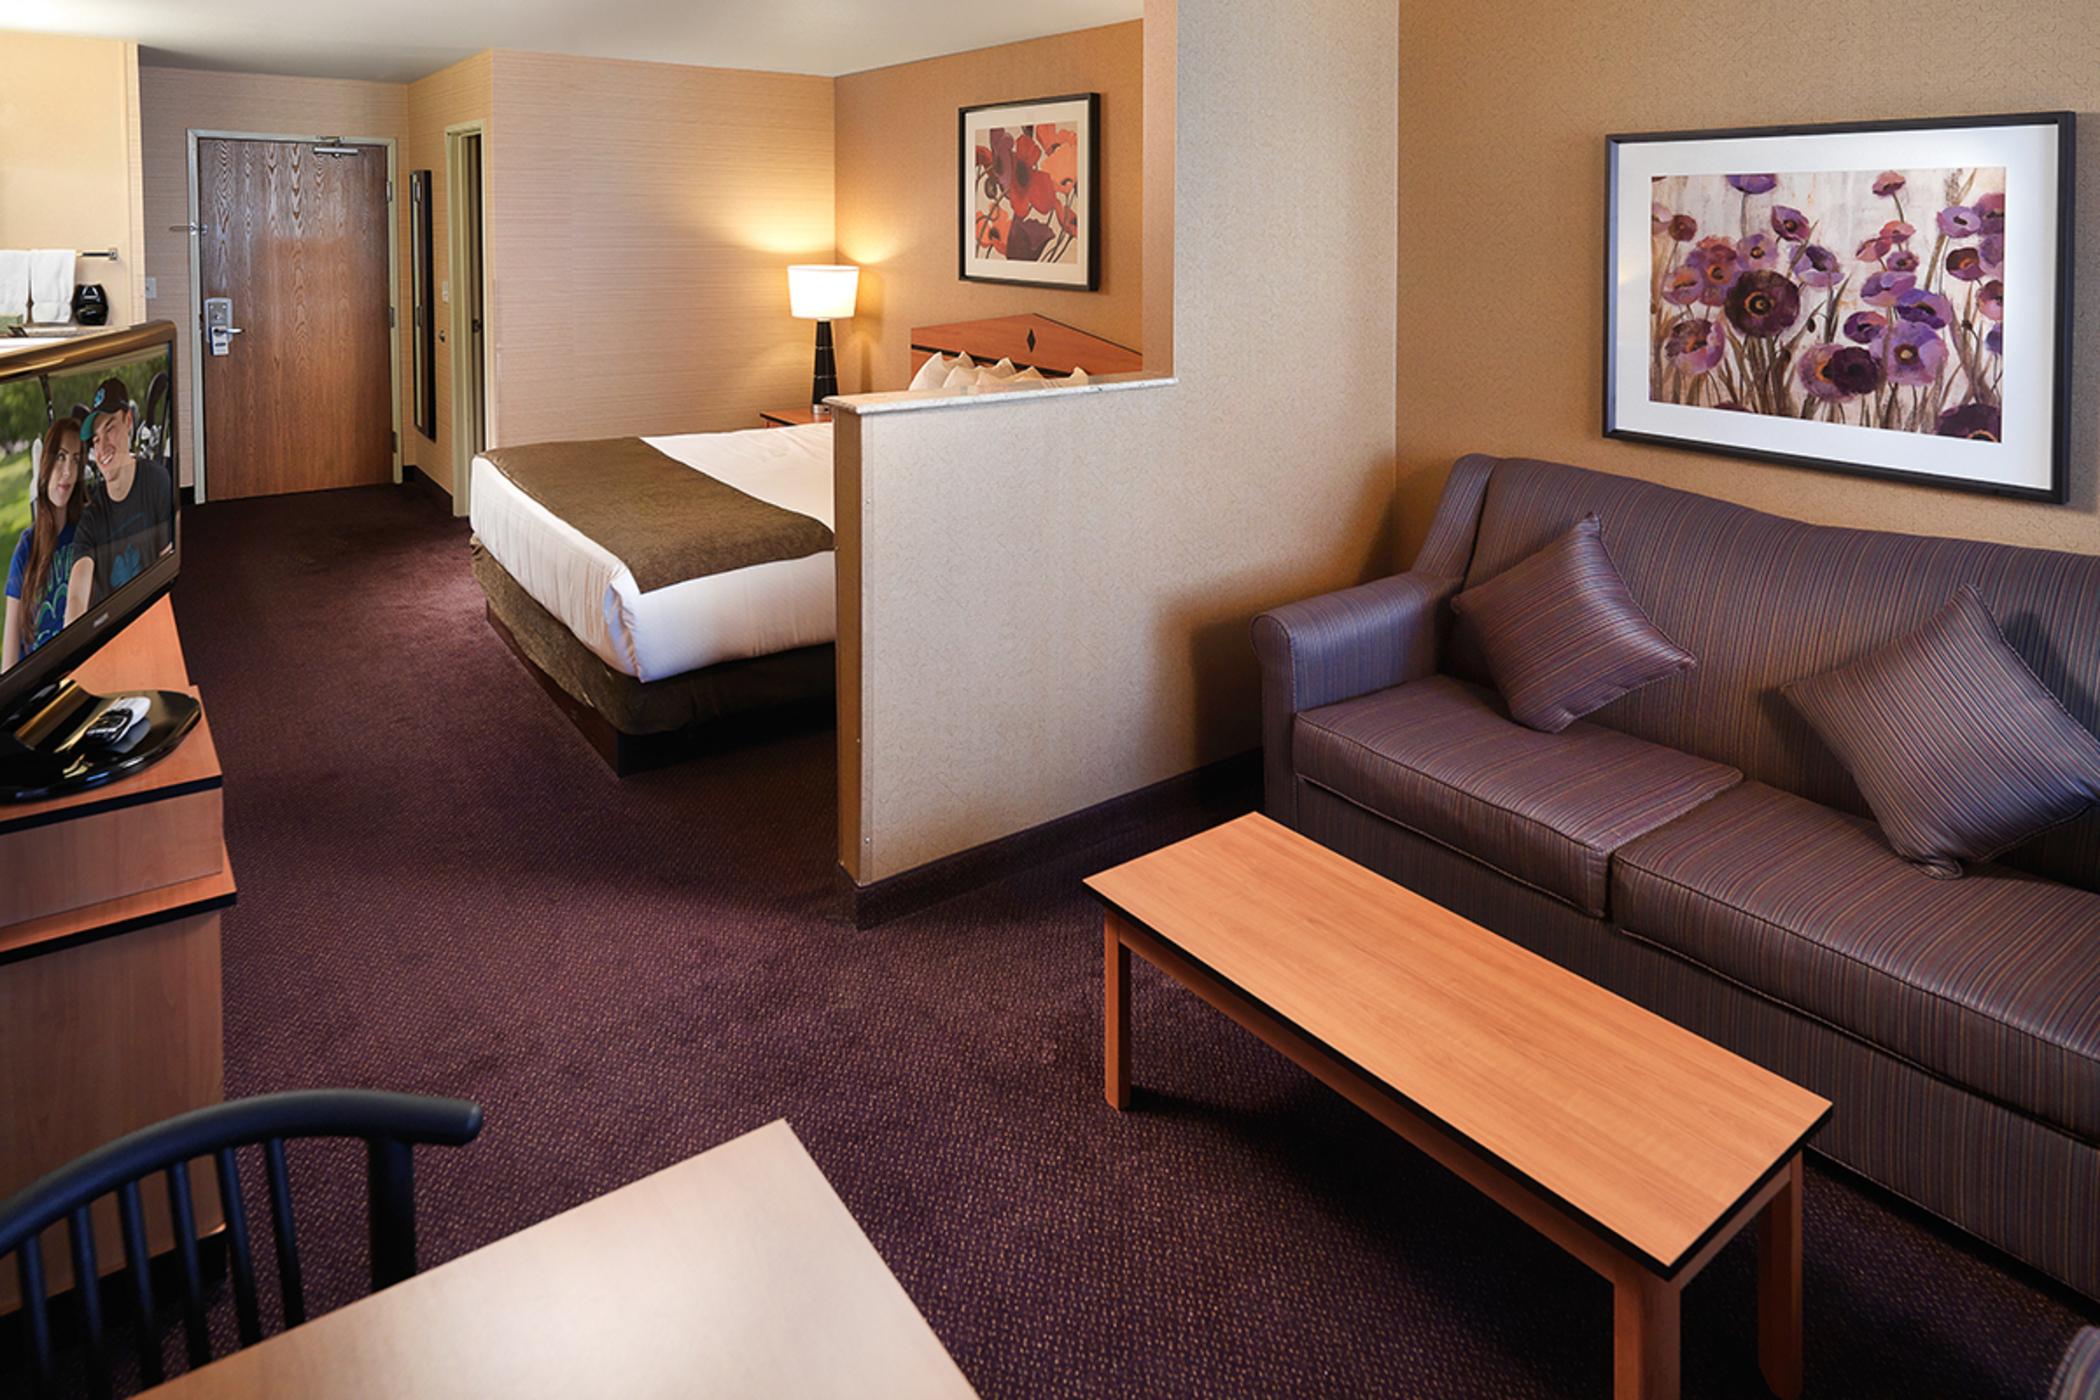 Crystal Inn Hotel & Suites - Midvalley Murray Εξωτερικό φωτογραφία